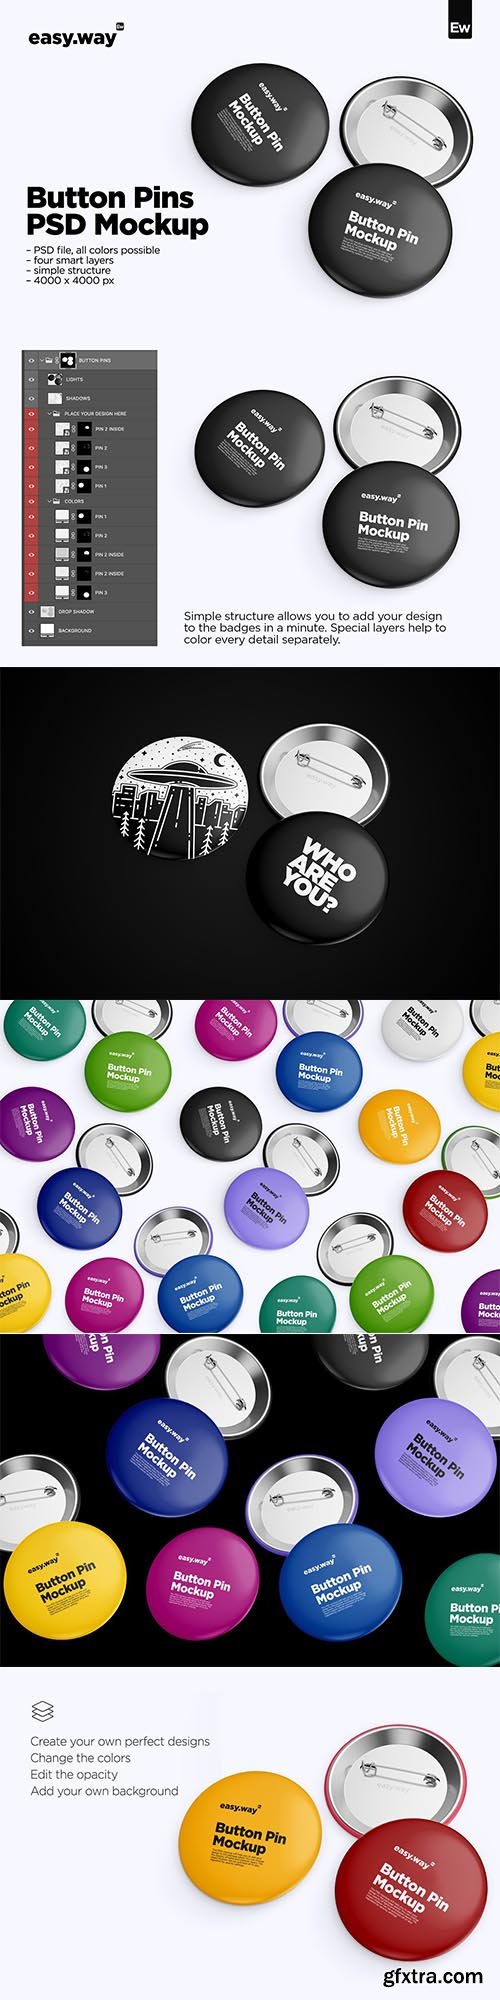 CreativeMarket - Button Pins PSD Mockup 5926539